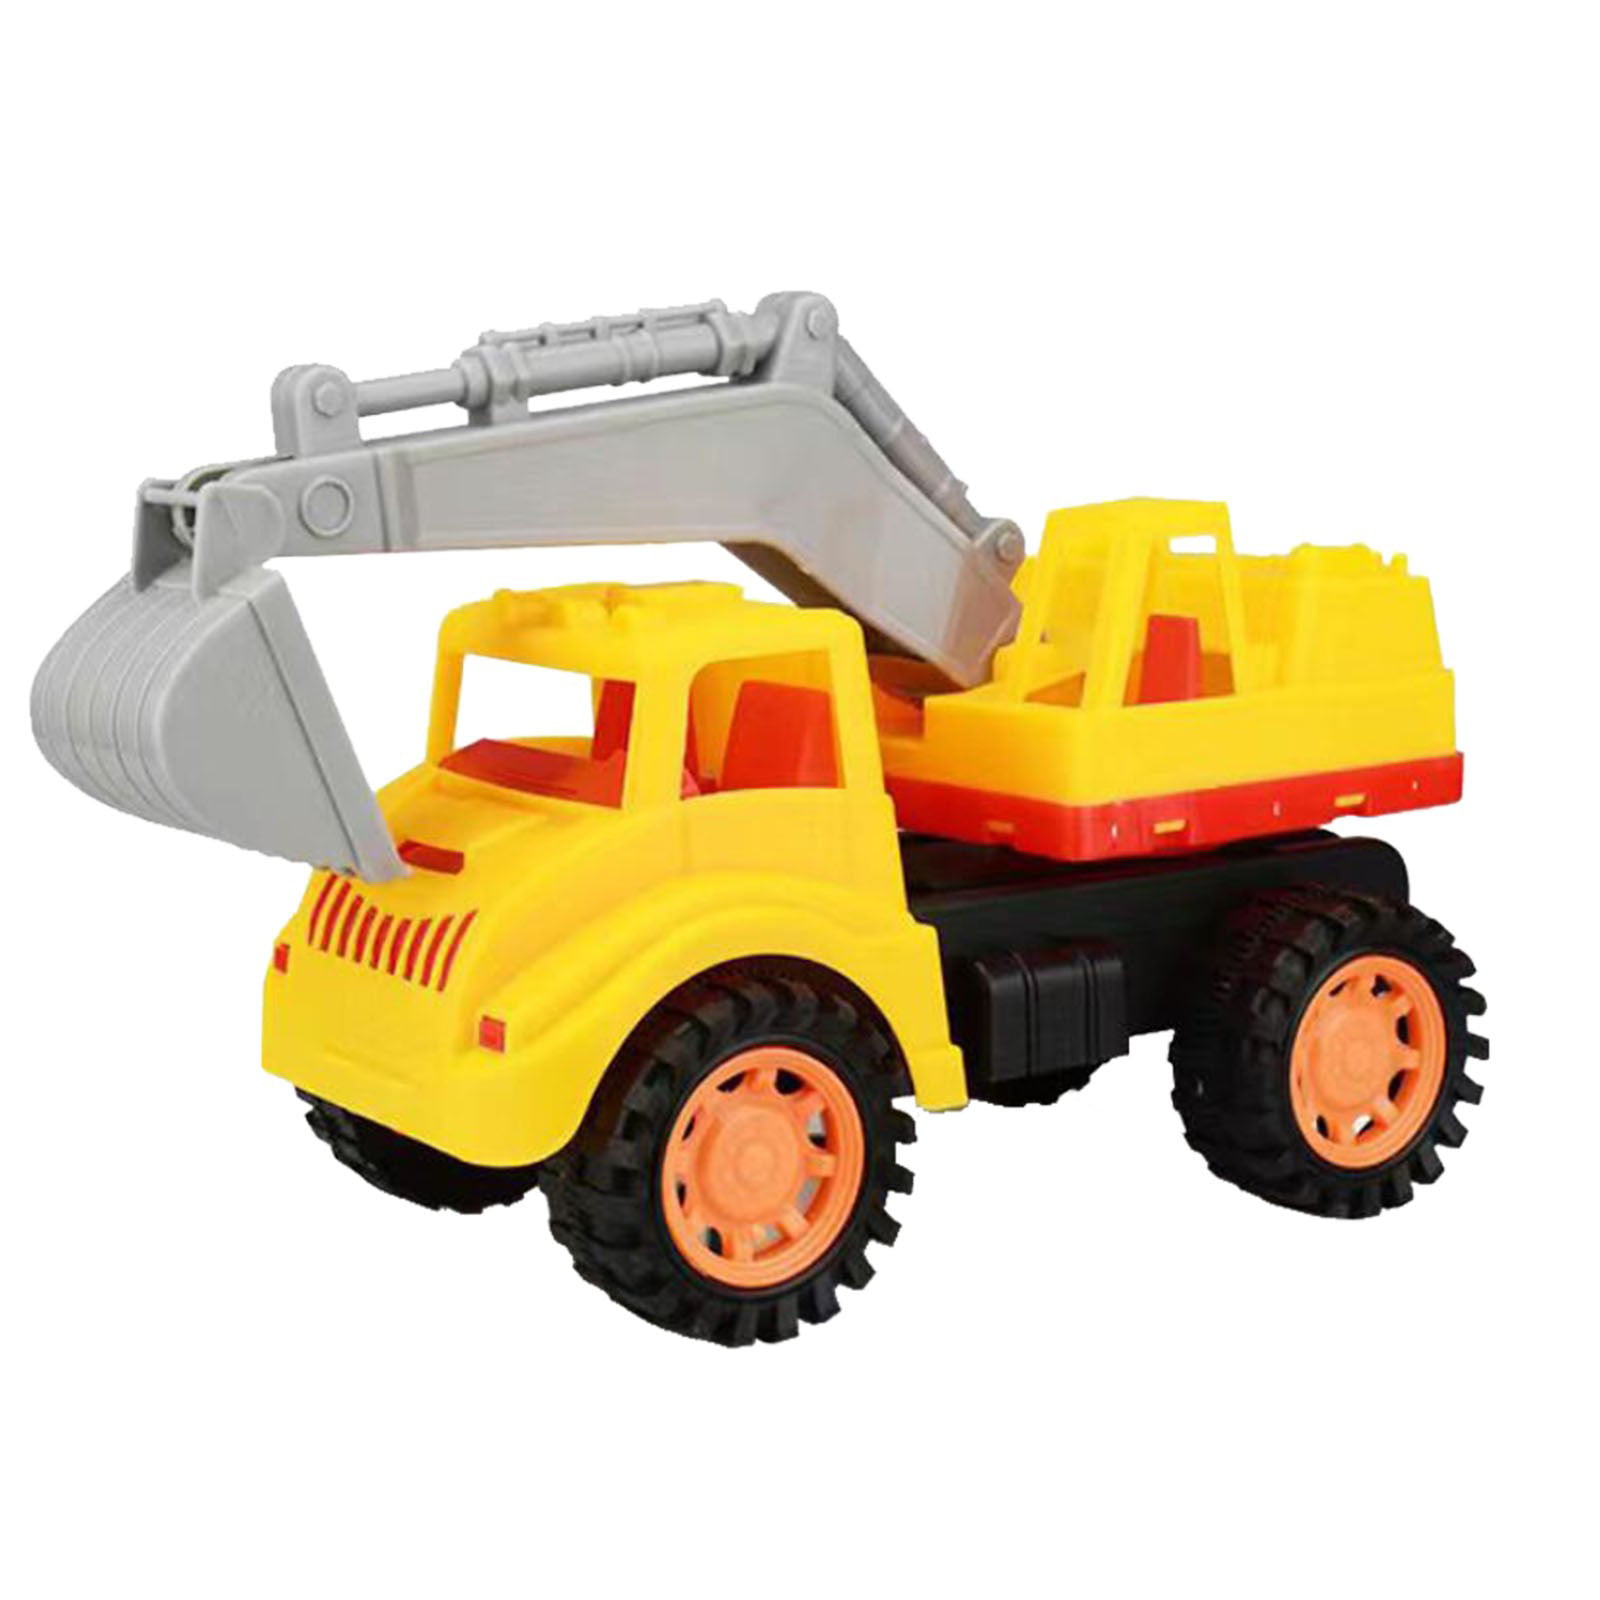 Details about   Engineering Construction Truck Car Crane Model Excavator Digger Vehicle Kids